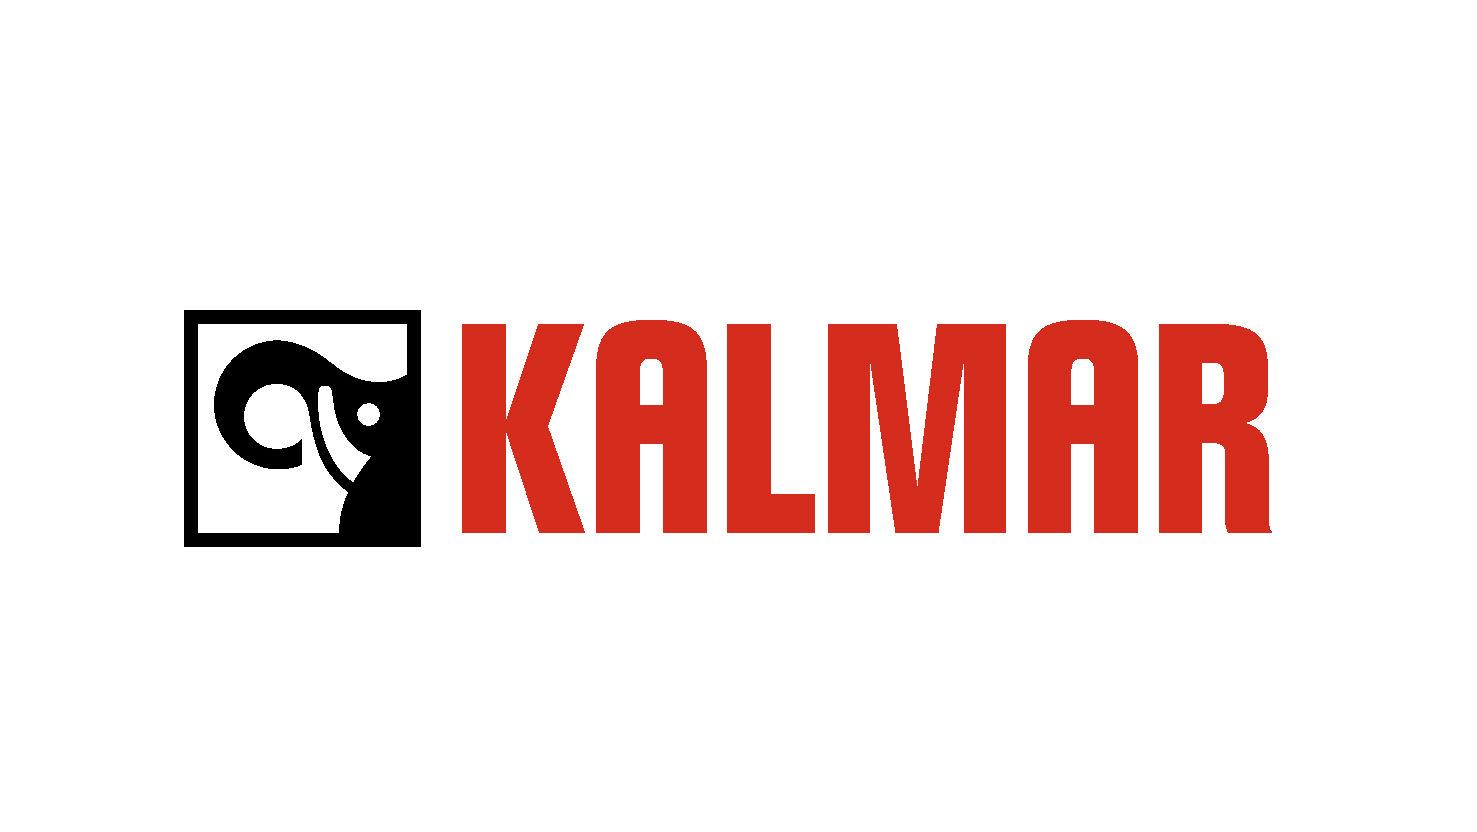 kalmar_logo